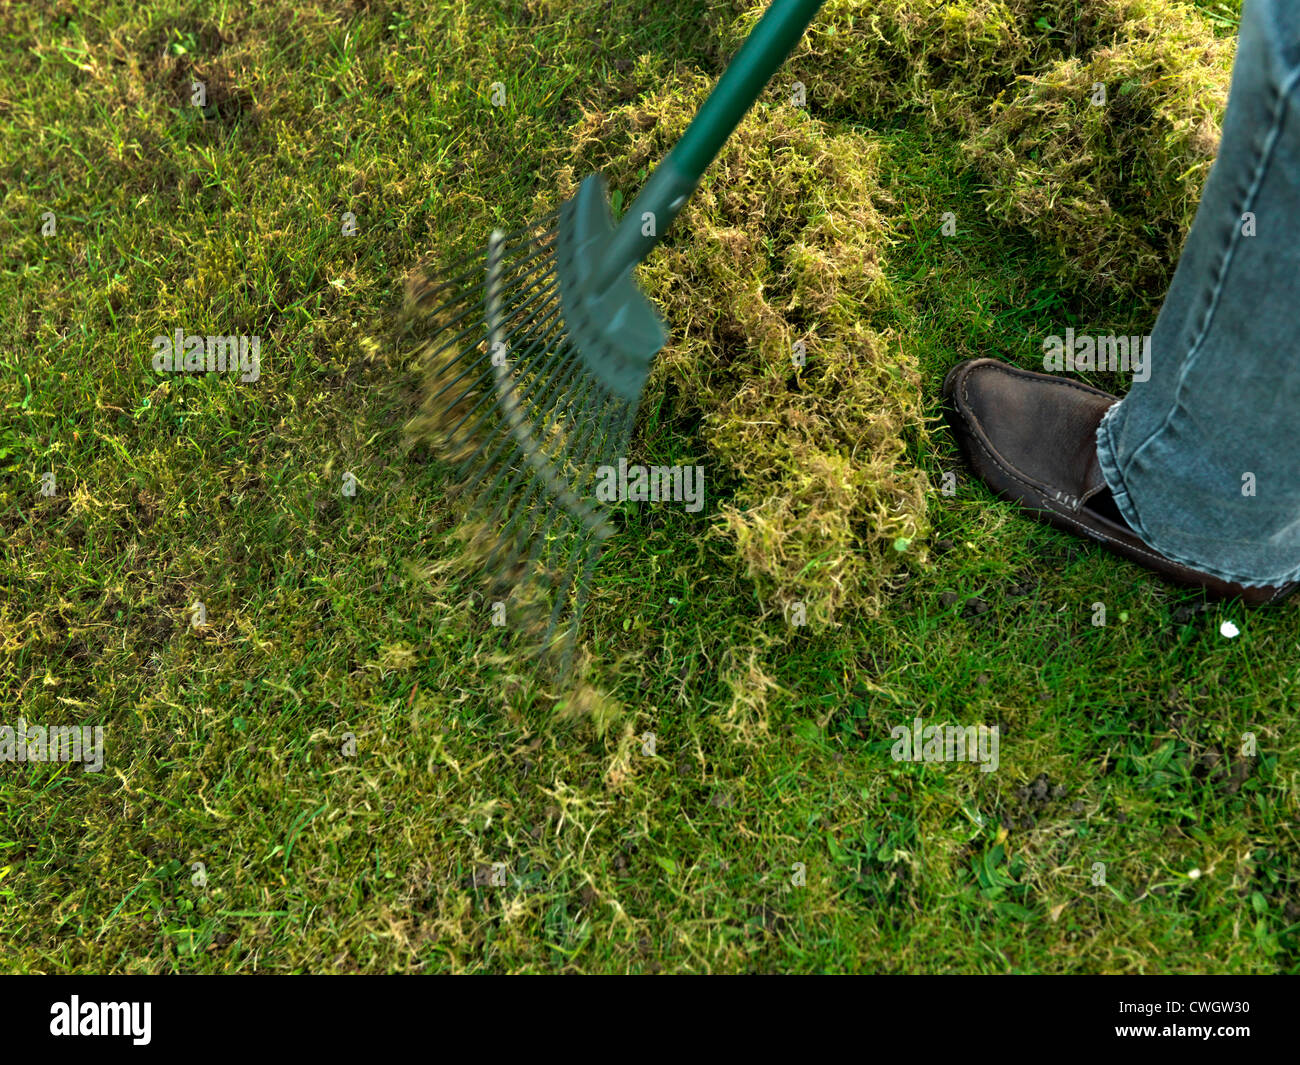 Scarification or Scarifying a Lawn with a Rake In A Garden England Stock Photo